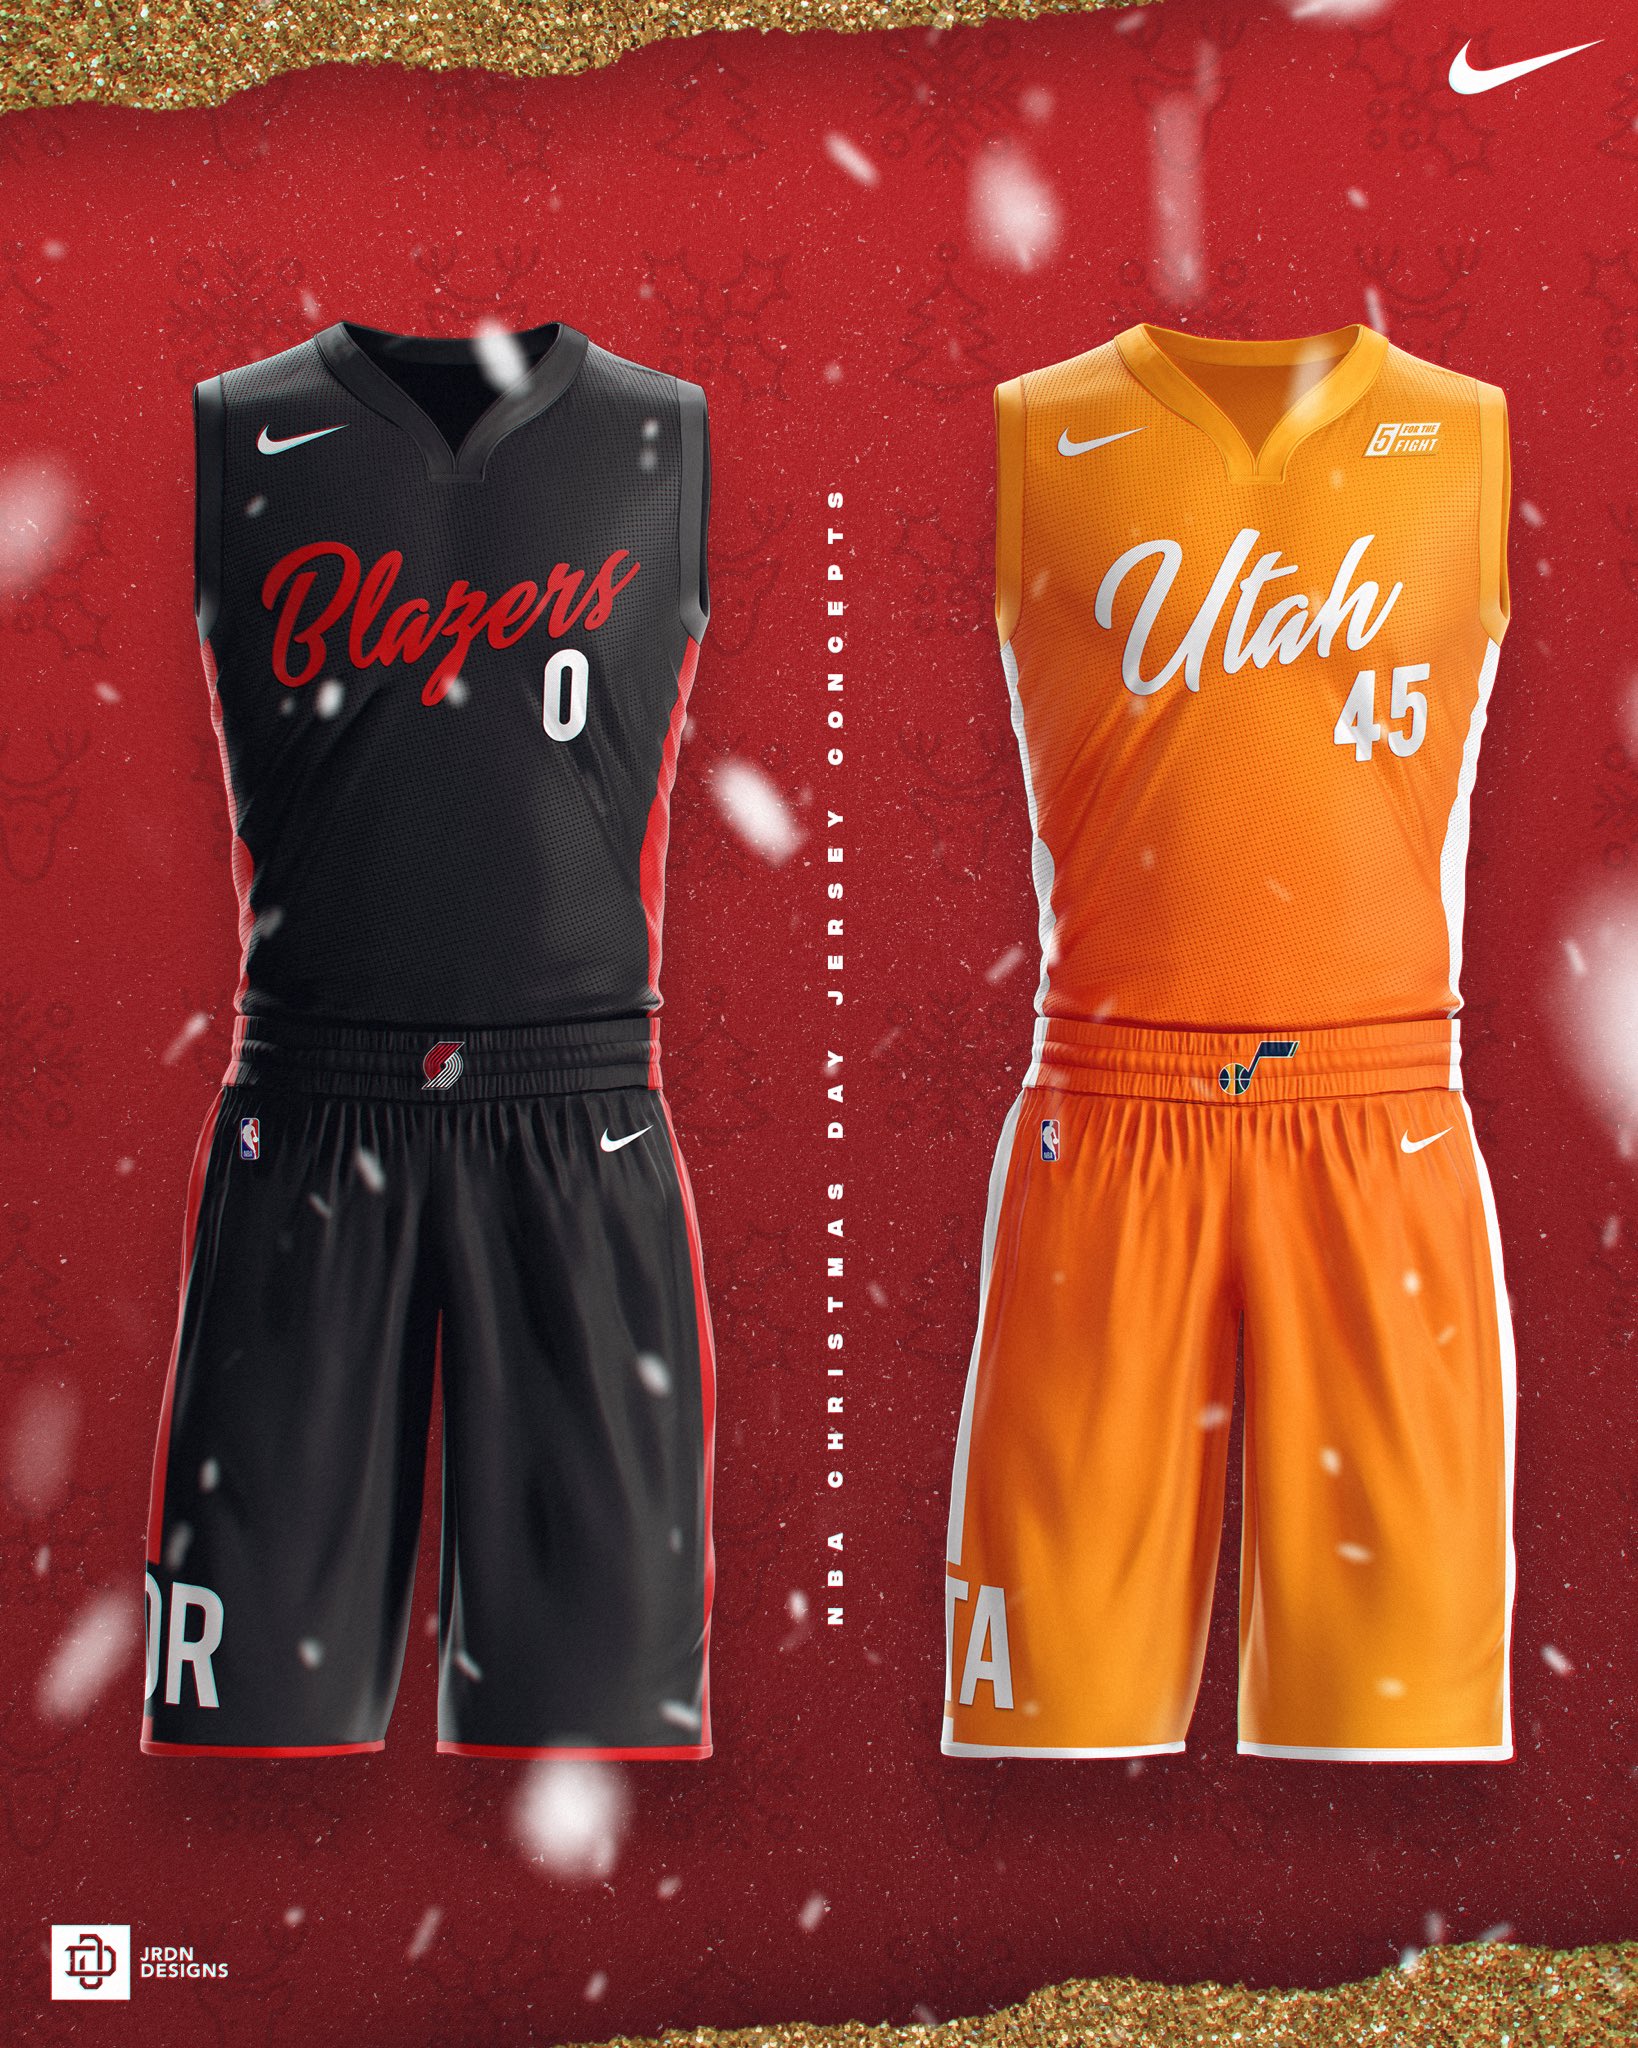 JRDN 💍 on X: 2018 NBA Christmas Day Jersey concepts 🎄 @NBA @Nike  @nikebasketball #nba #basketball #christmas #christmasday #nbachristmasday  #nbajersey #jerseyconcept #jerseyswap #design #sports #warriors #lakers  #lebronjames #step